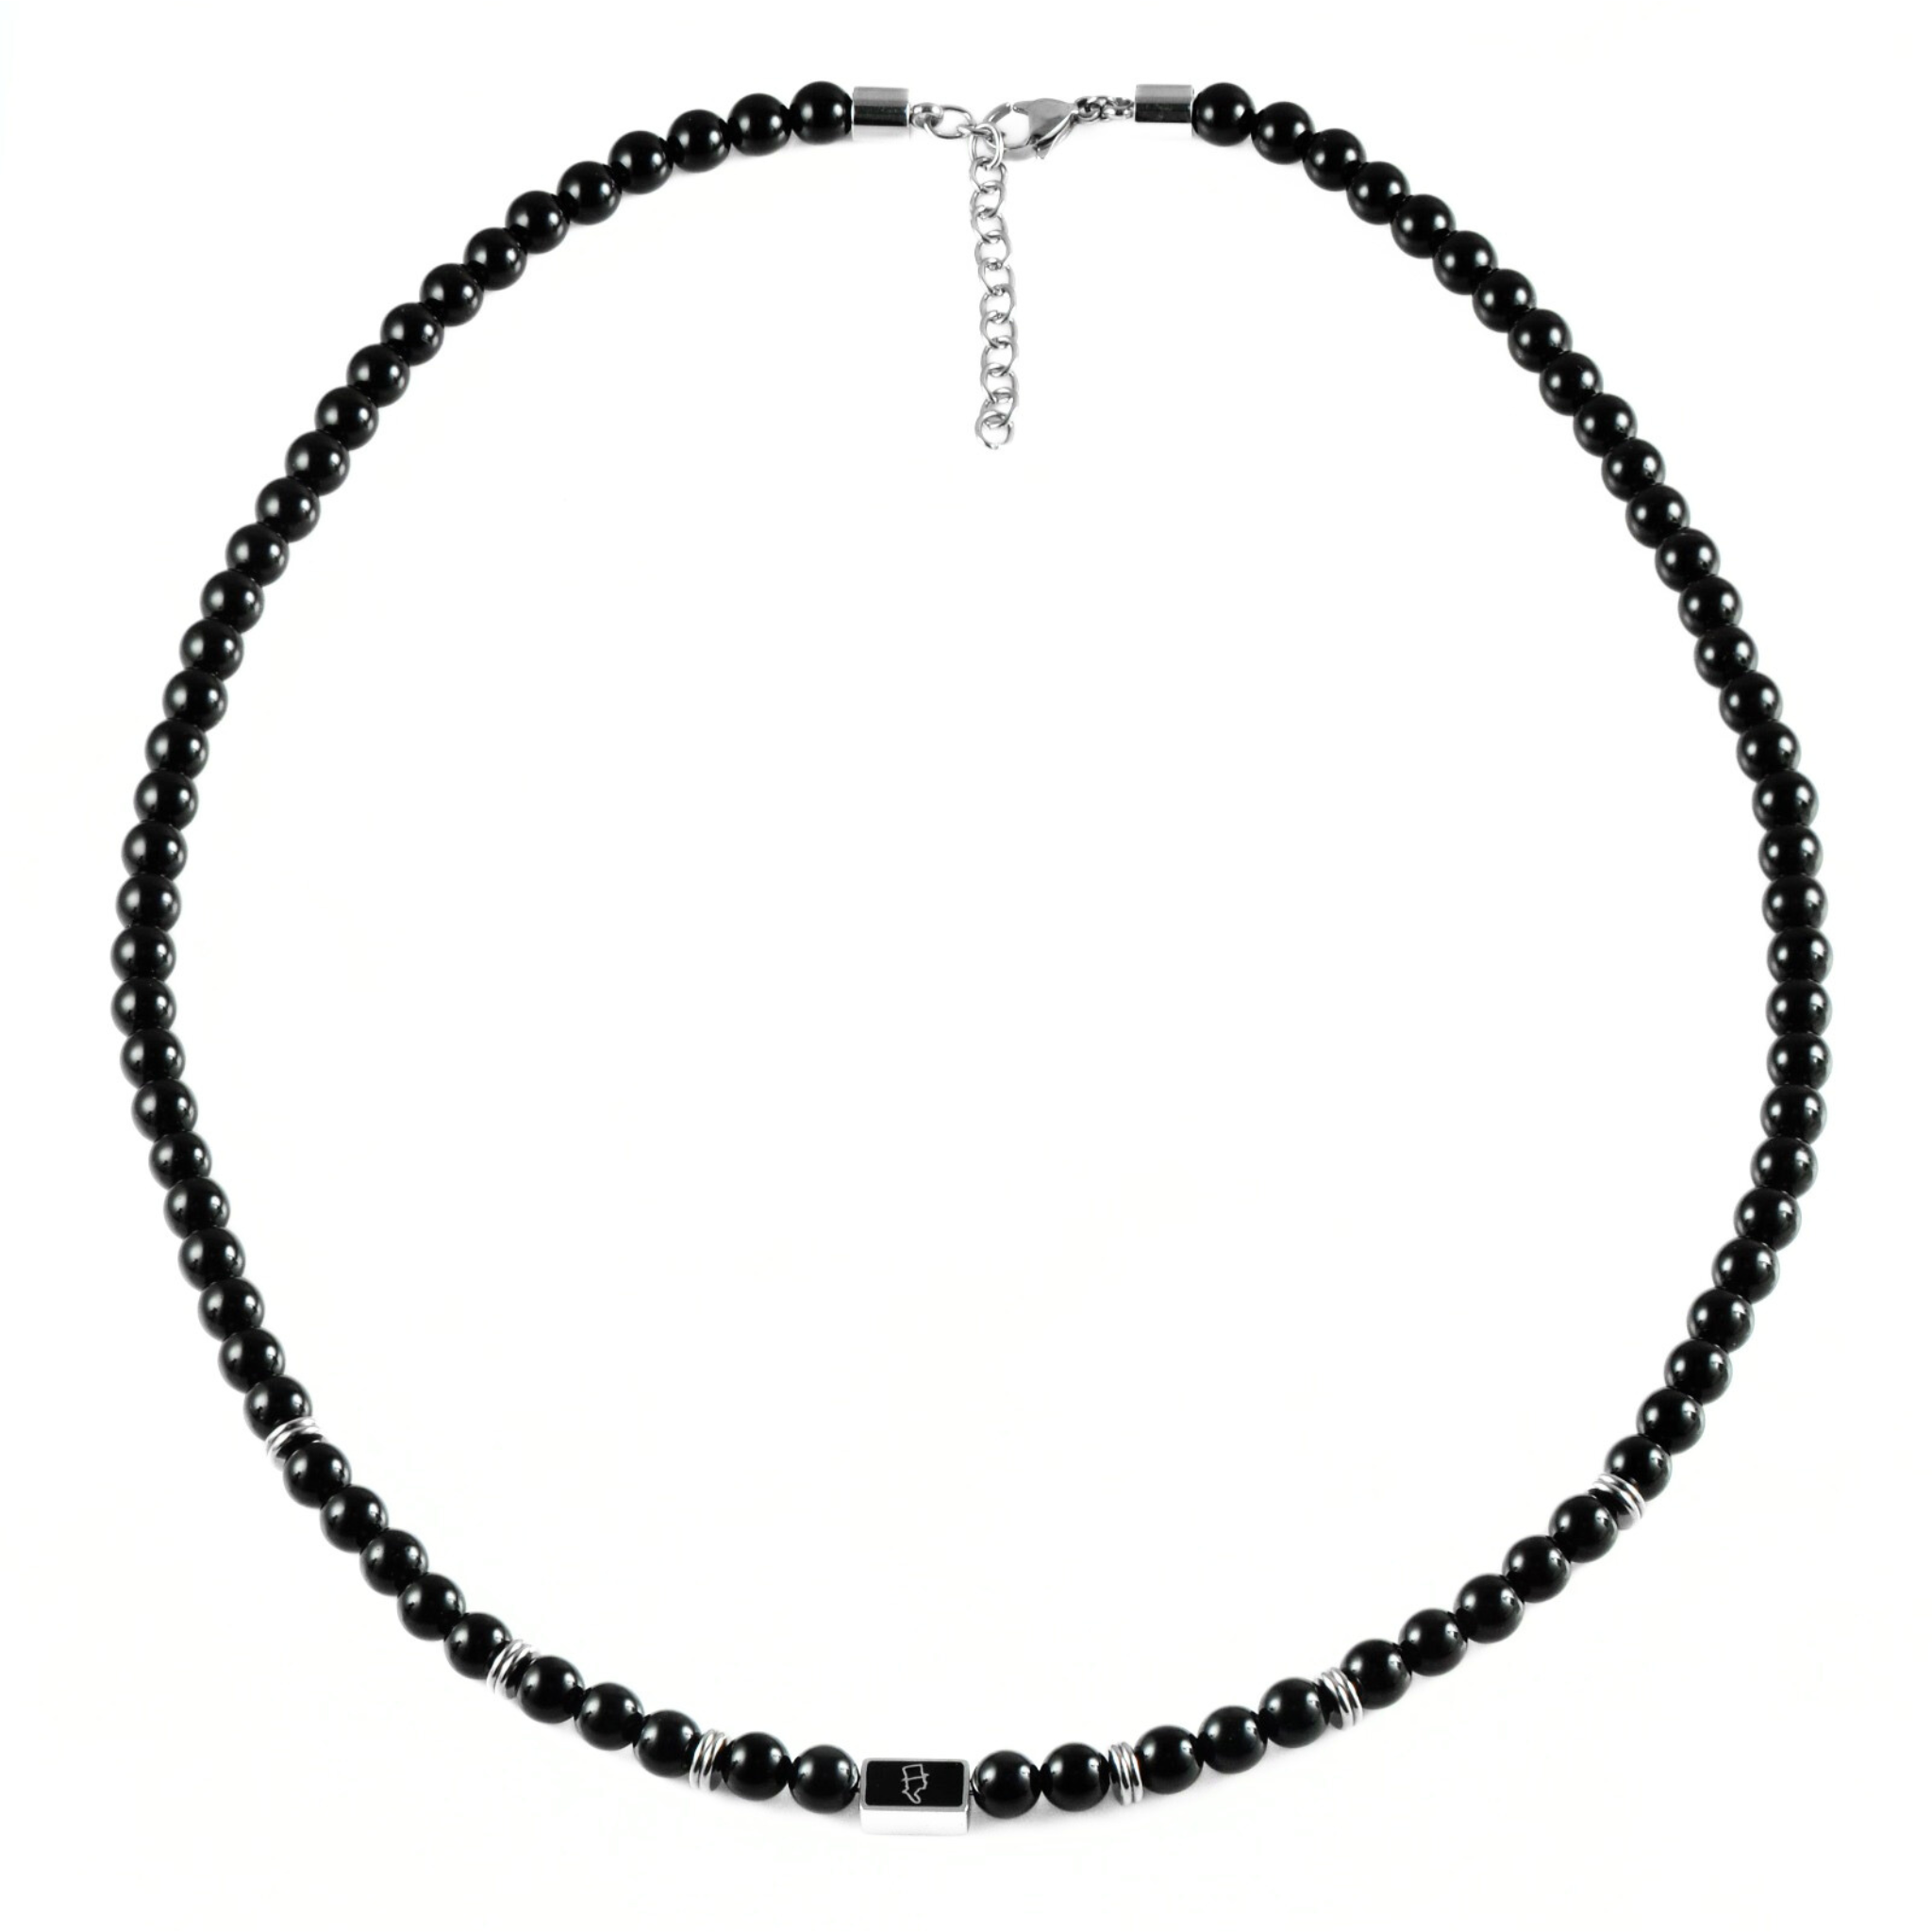 Gemstone necklace 6mm Black